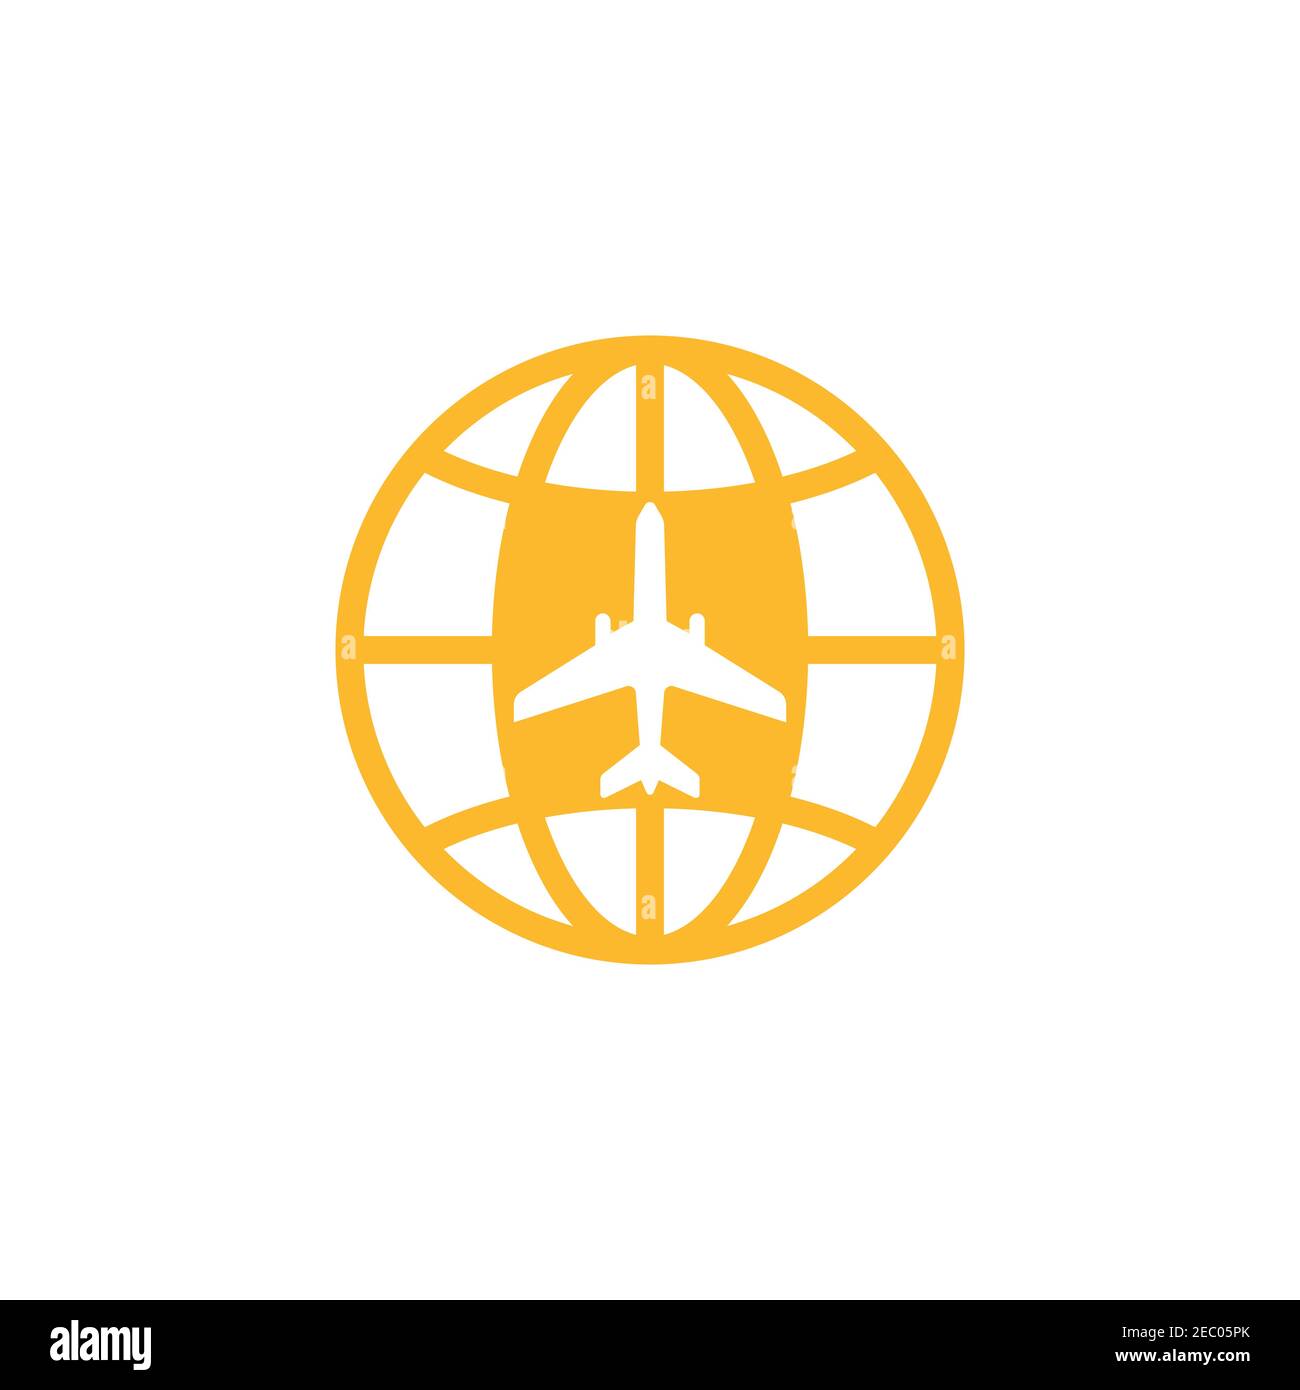 Aviation logo design vector template. Plane with globe symbol illustration Stock Vector